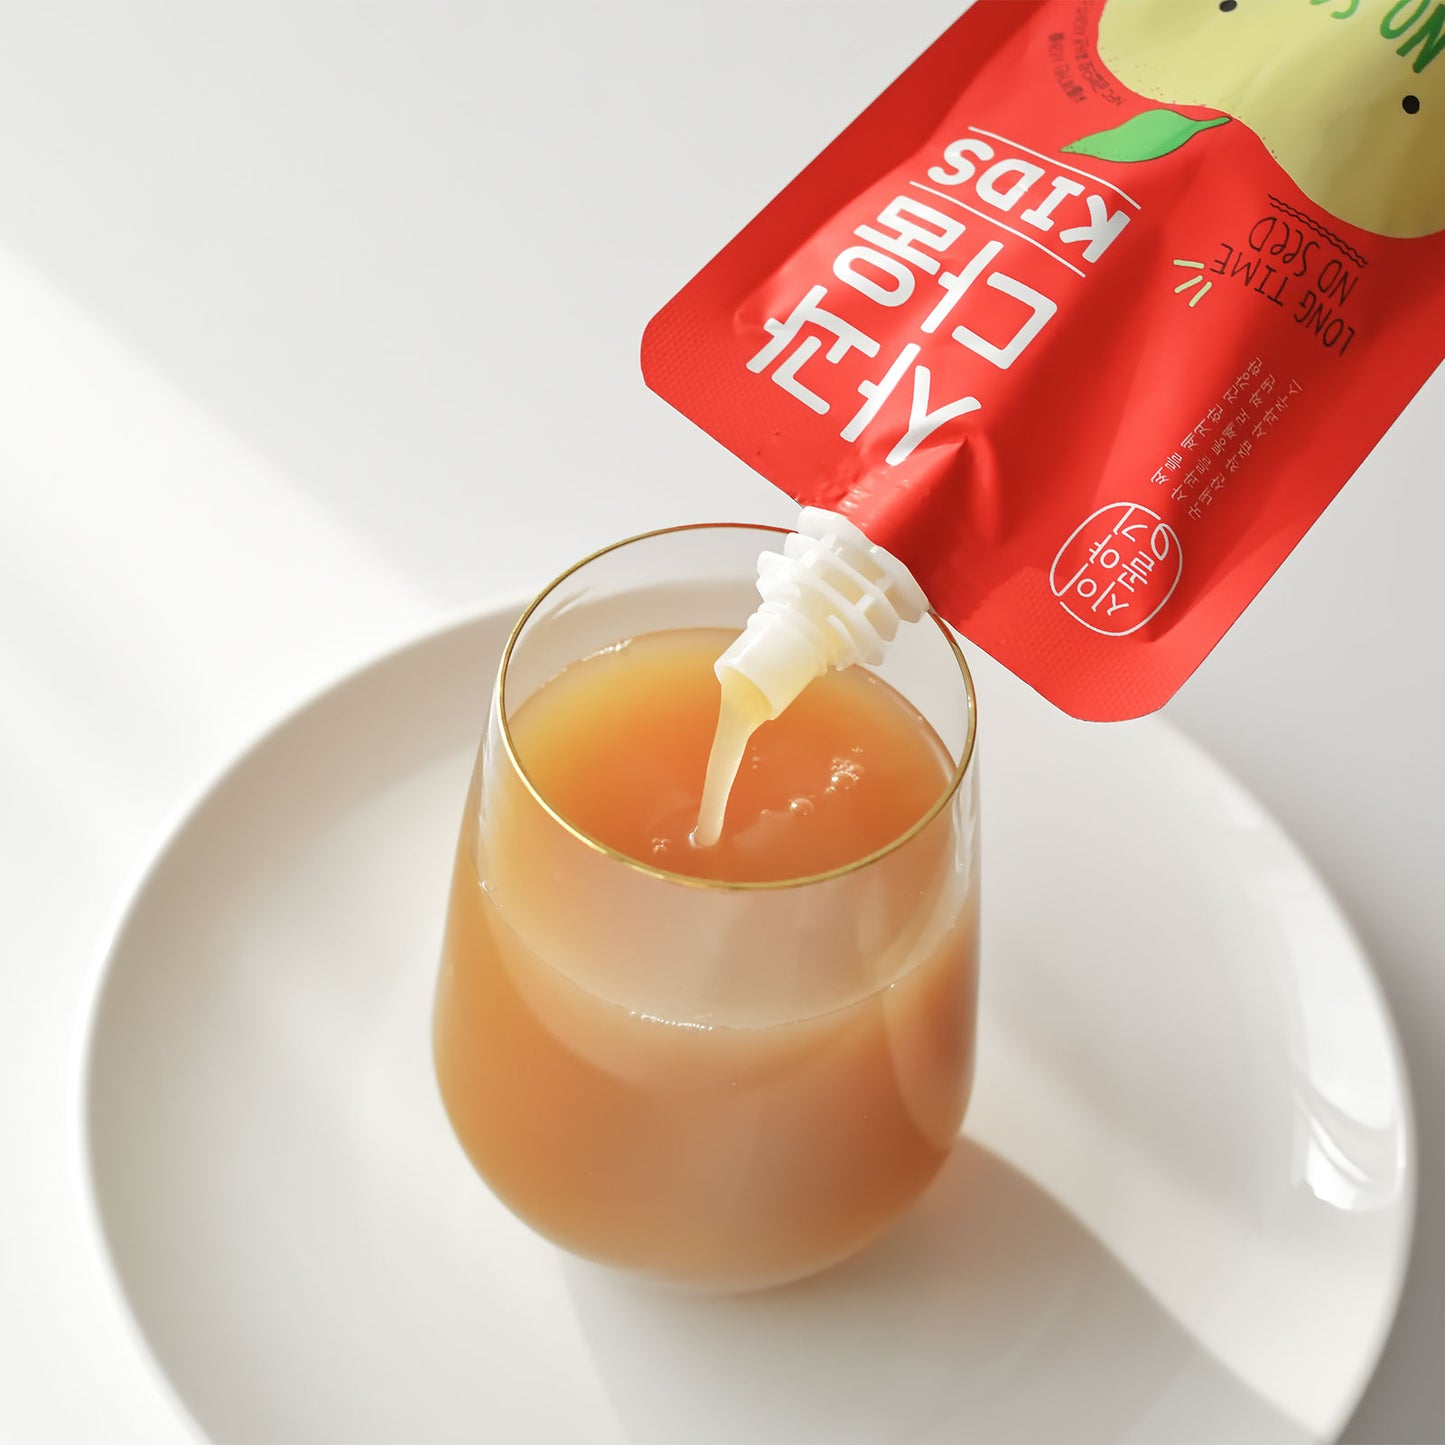 Sigolstory - NFC Seedless Apple Juice for Kids 120ml